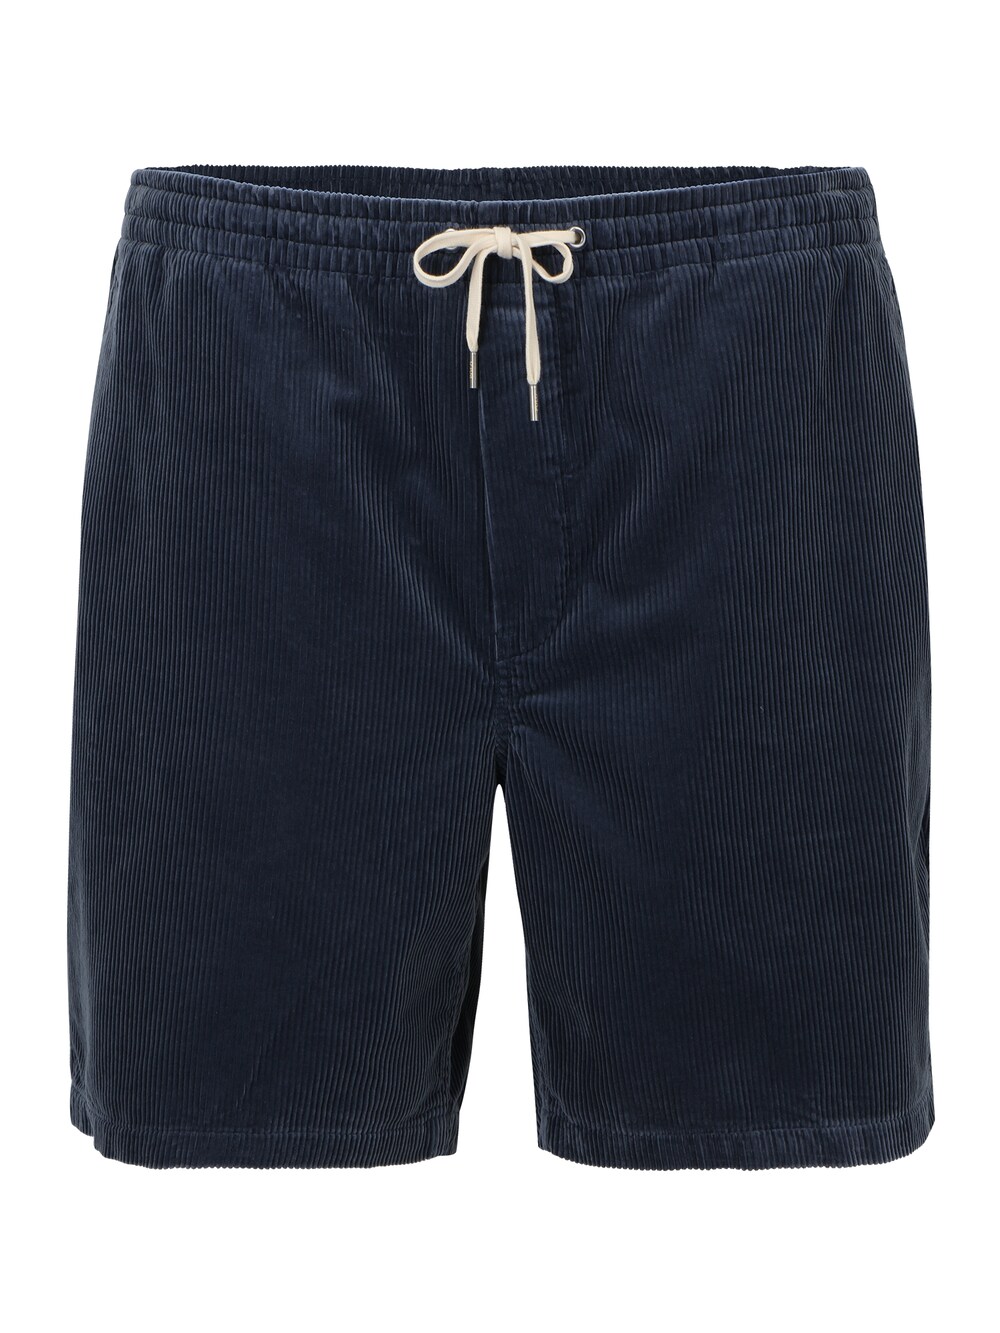 Обычные брюки Polo Ralph Lauren Big & Tall, темно-синий брюки 714844763002 polo ralph lauren темно синий